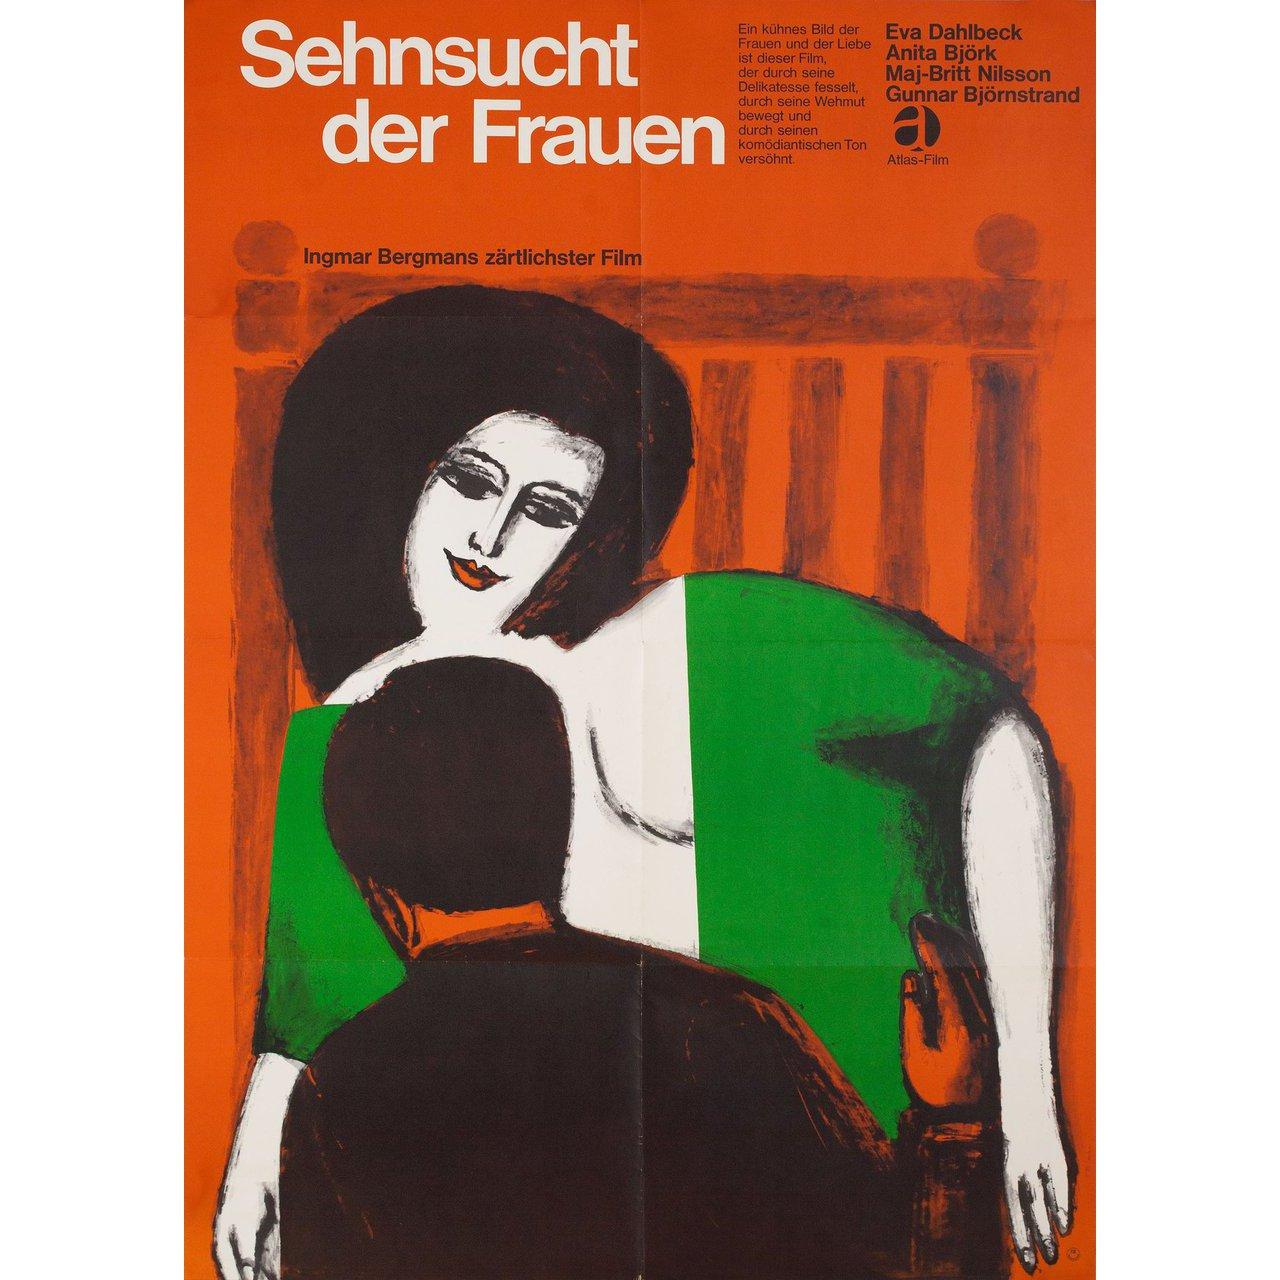 Original 1962 German A1 poster by Heinz Edelmann for the 1952 film Secrets of Women (Kvinnors vantan) directed by Ingmar Bergman with Anita Bjork / Eva Dahlbeck / Maj-Britt Nilsson / Birger Malmsten. Fine condition, folded. Many original posters